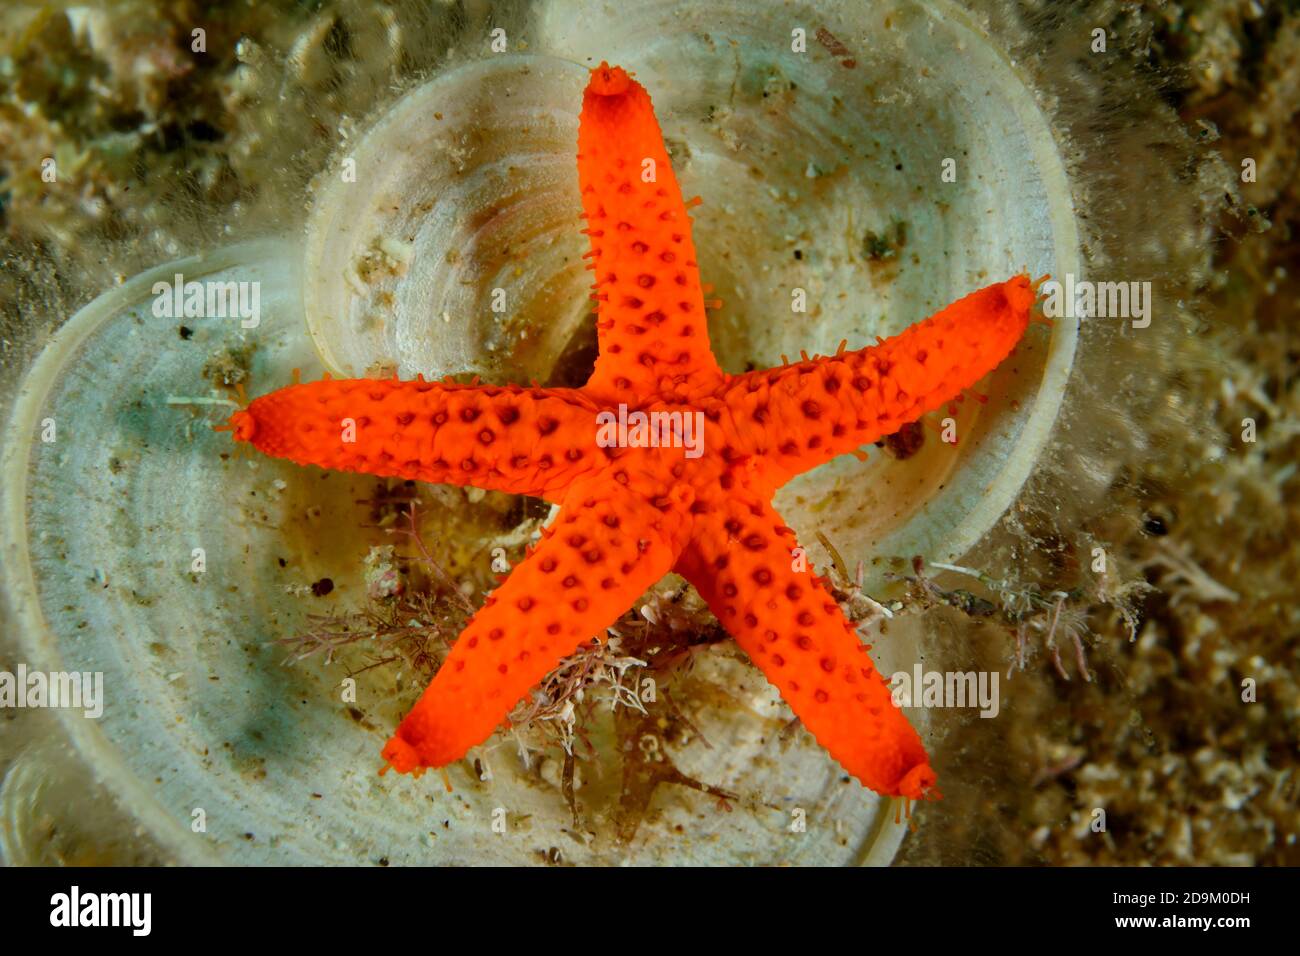 Red starfish or blood star on a funnel algae, Echinaster sepositus on Padina pavonica, Tamariu, Costa Brava, Spain, Mediterranean Stock Photo